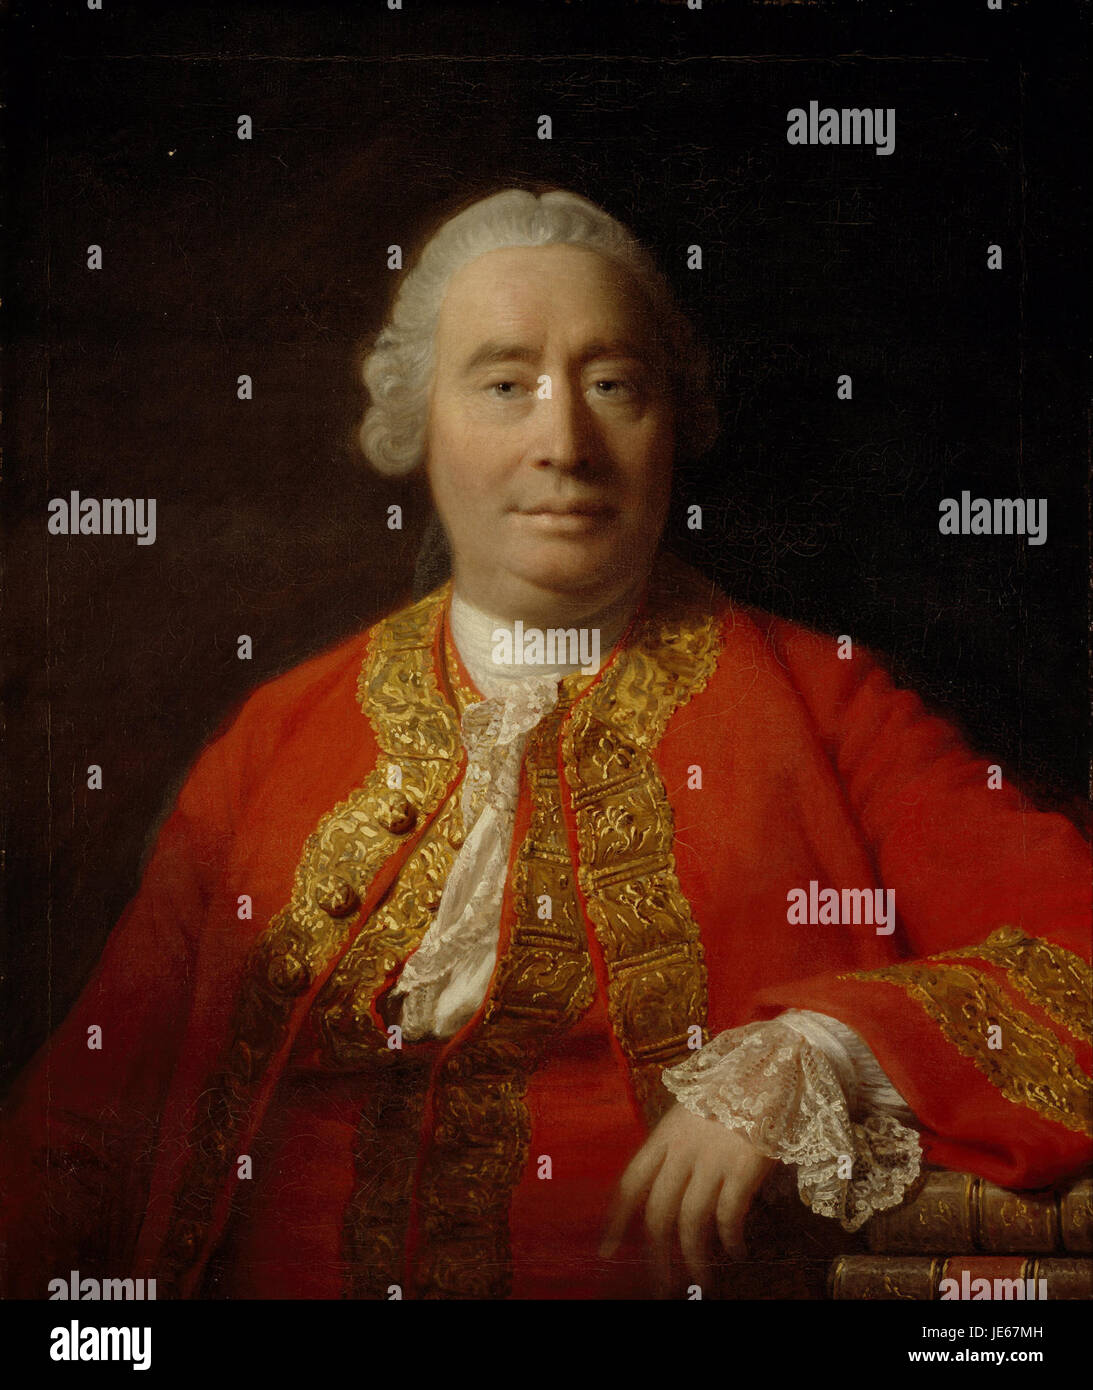 Allan Ramsay - David Hume, 1711 - 1776. Historian and philosopher - Stock Photo